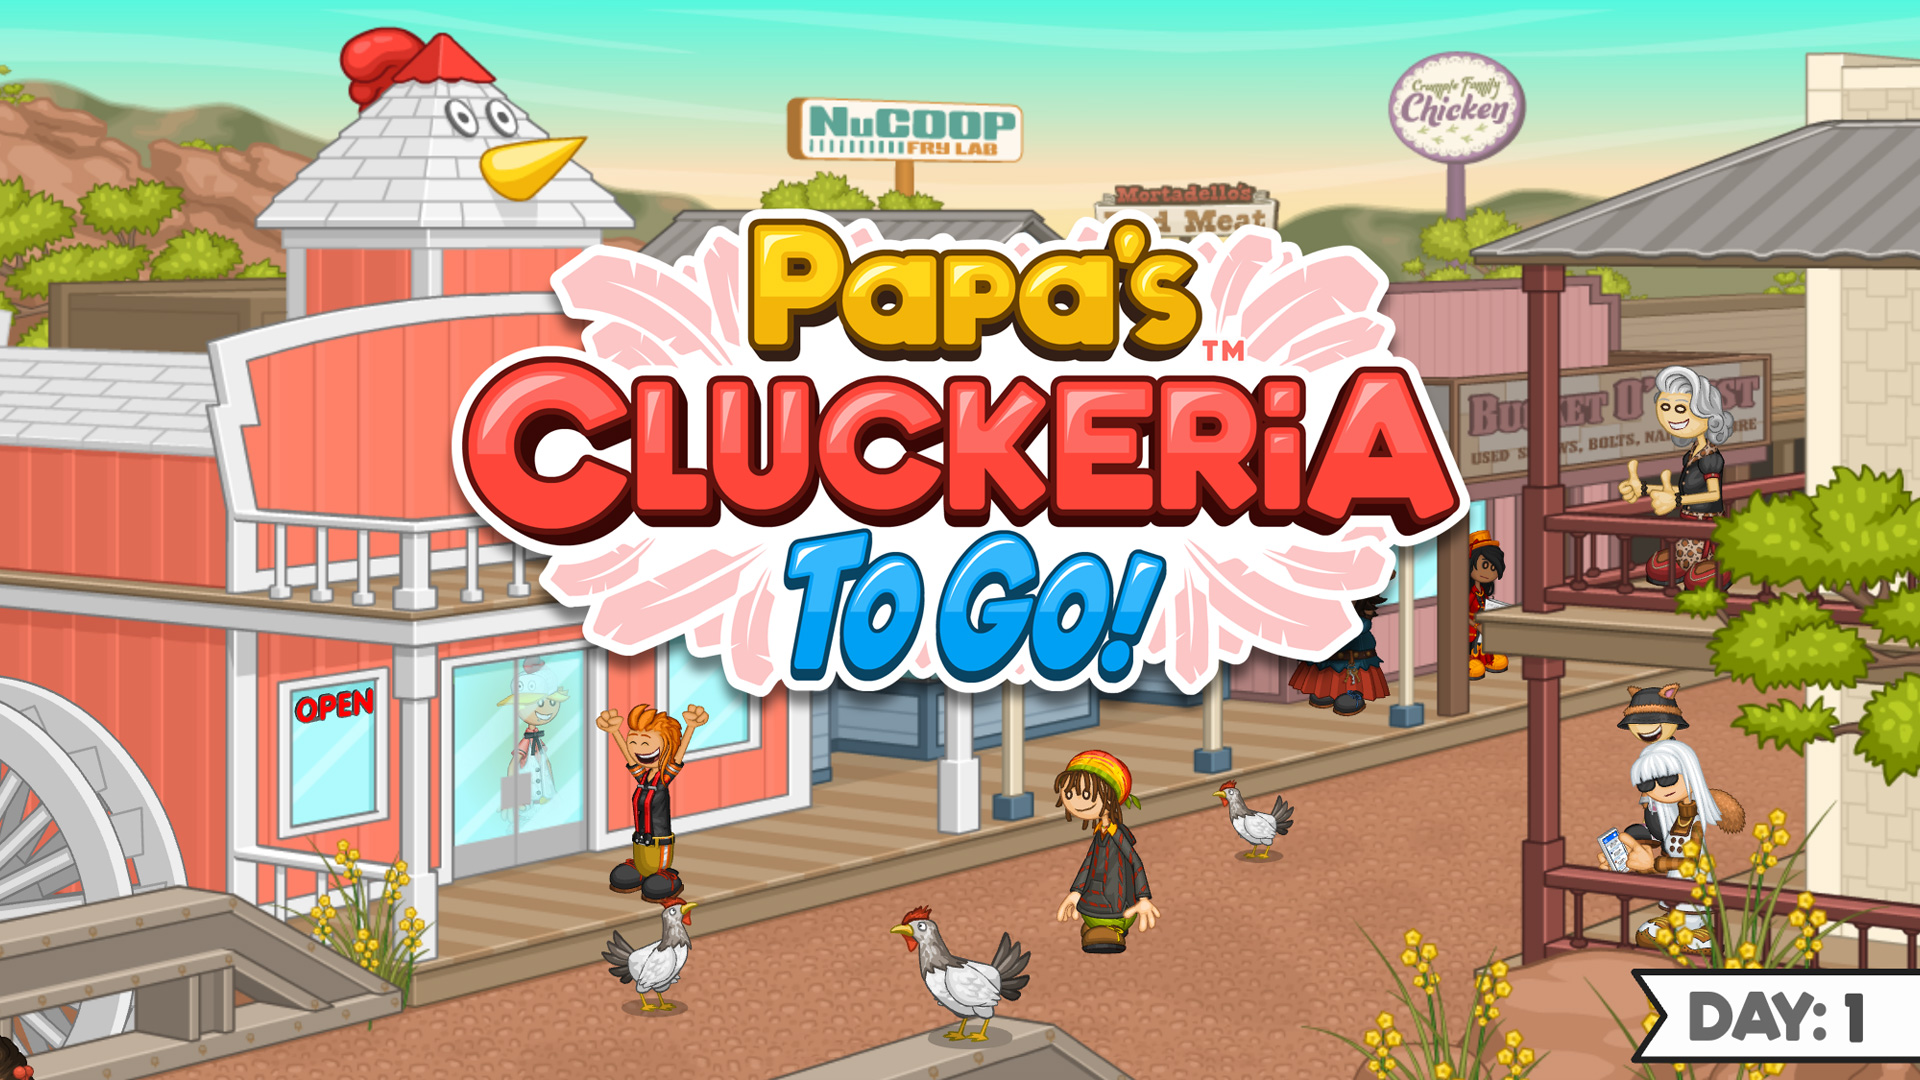 Download & Play Papa's Sushiria To Go! on PC & Mac (Emulator)